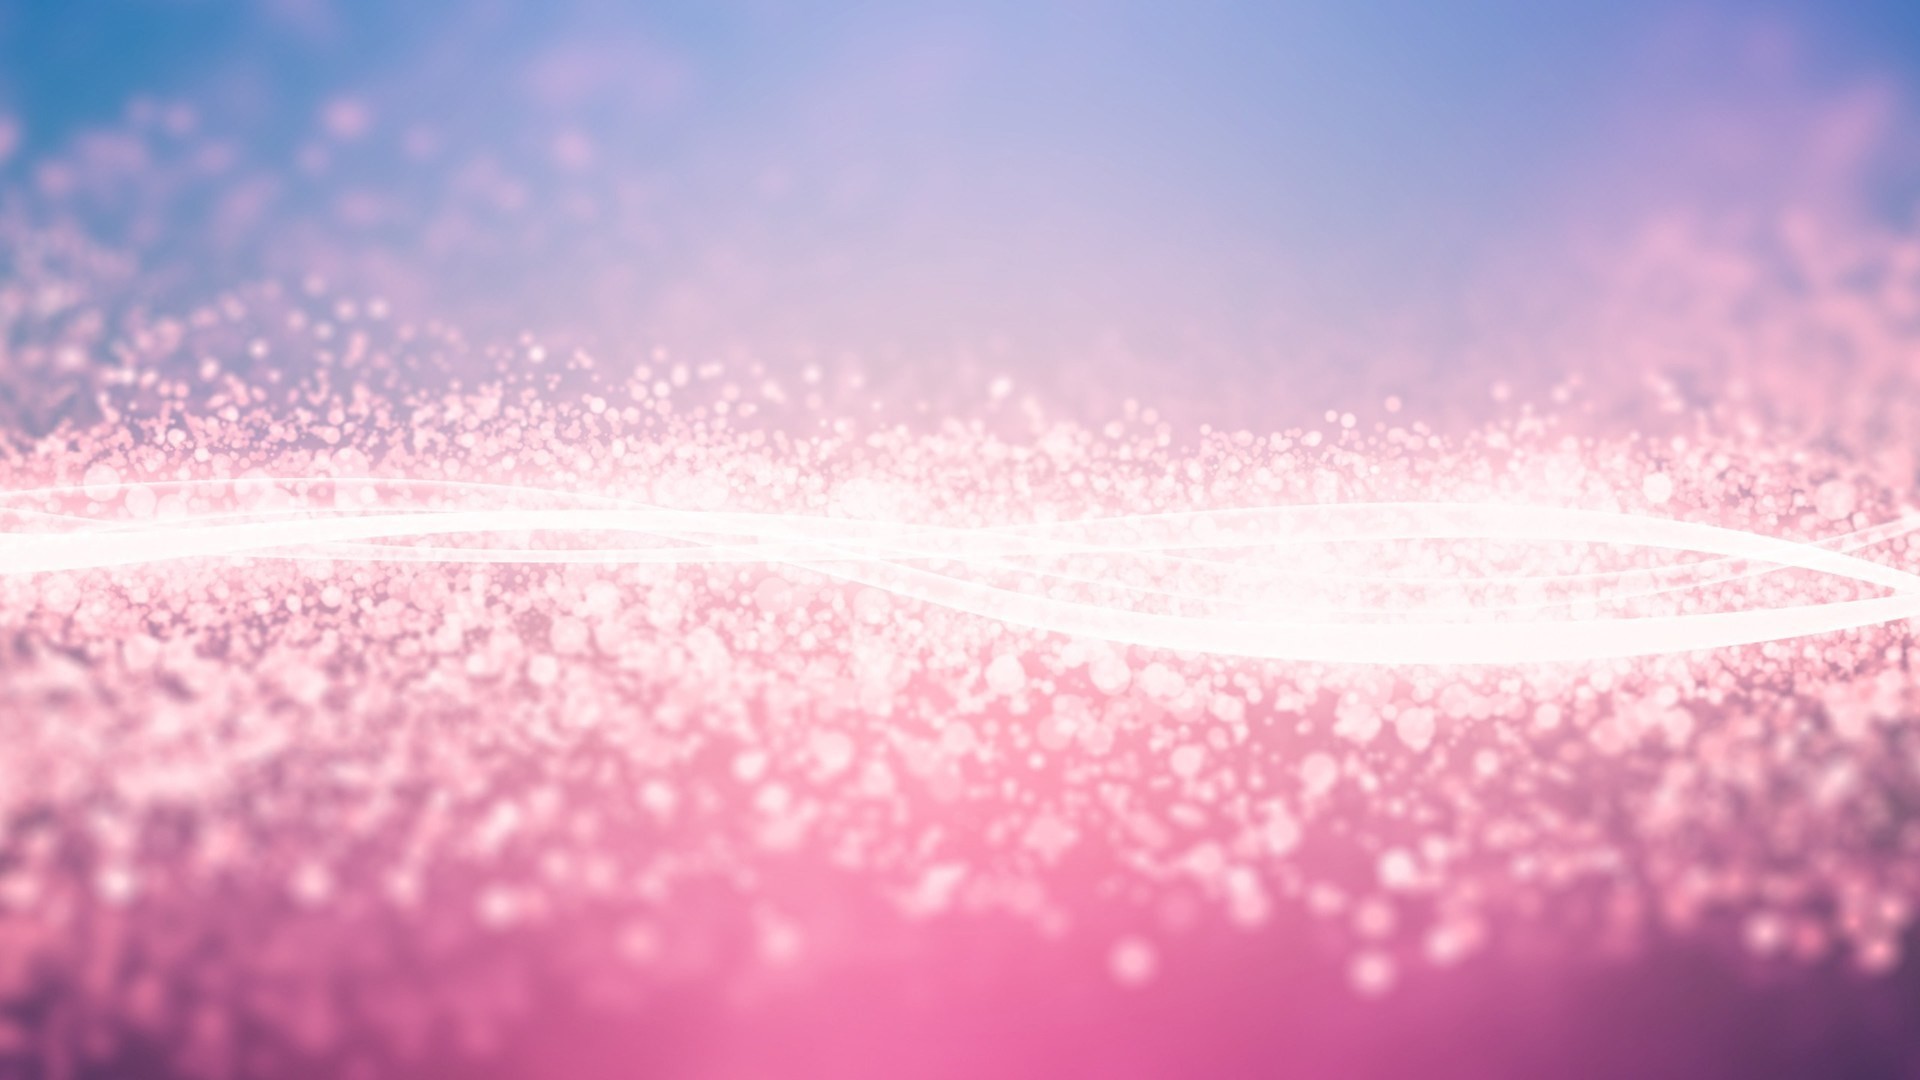 pictures pink glitter wallpaper hd | ololoshenka | Pinterest | Pink glitter  wallpaper